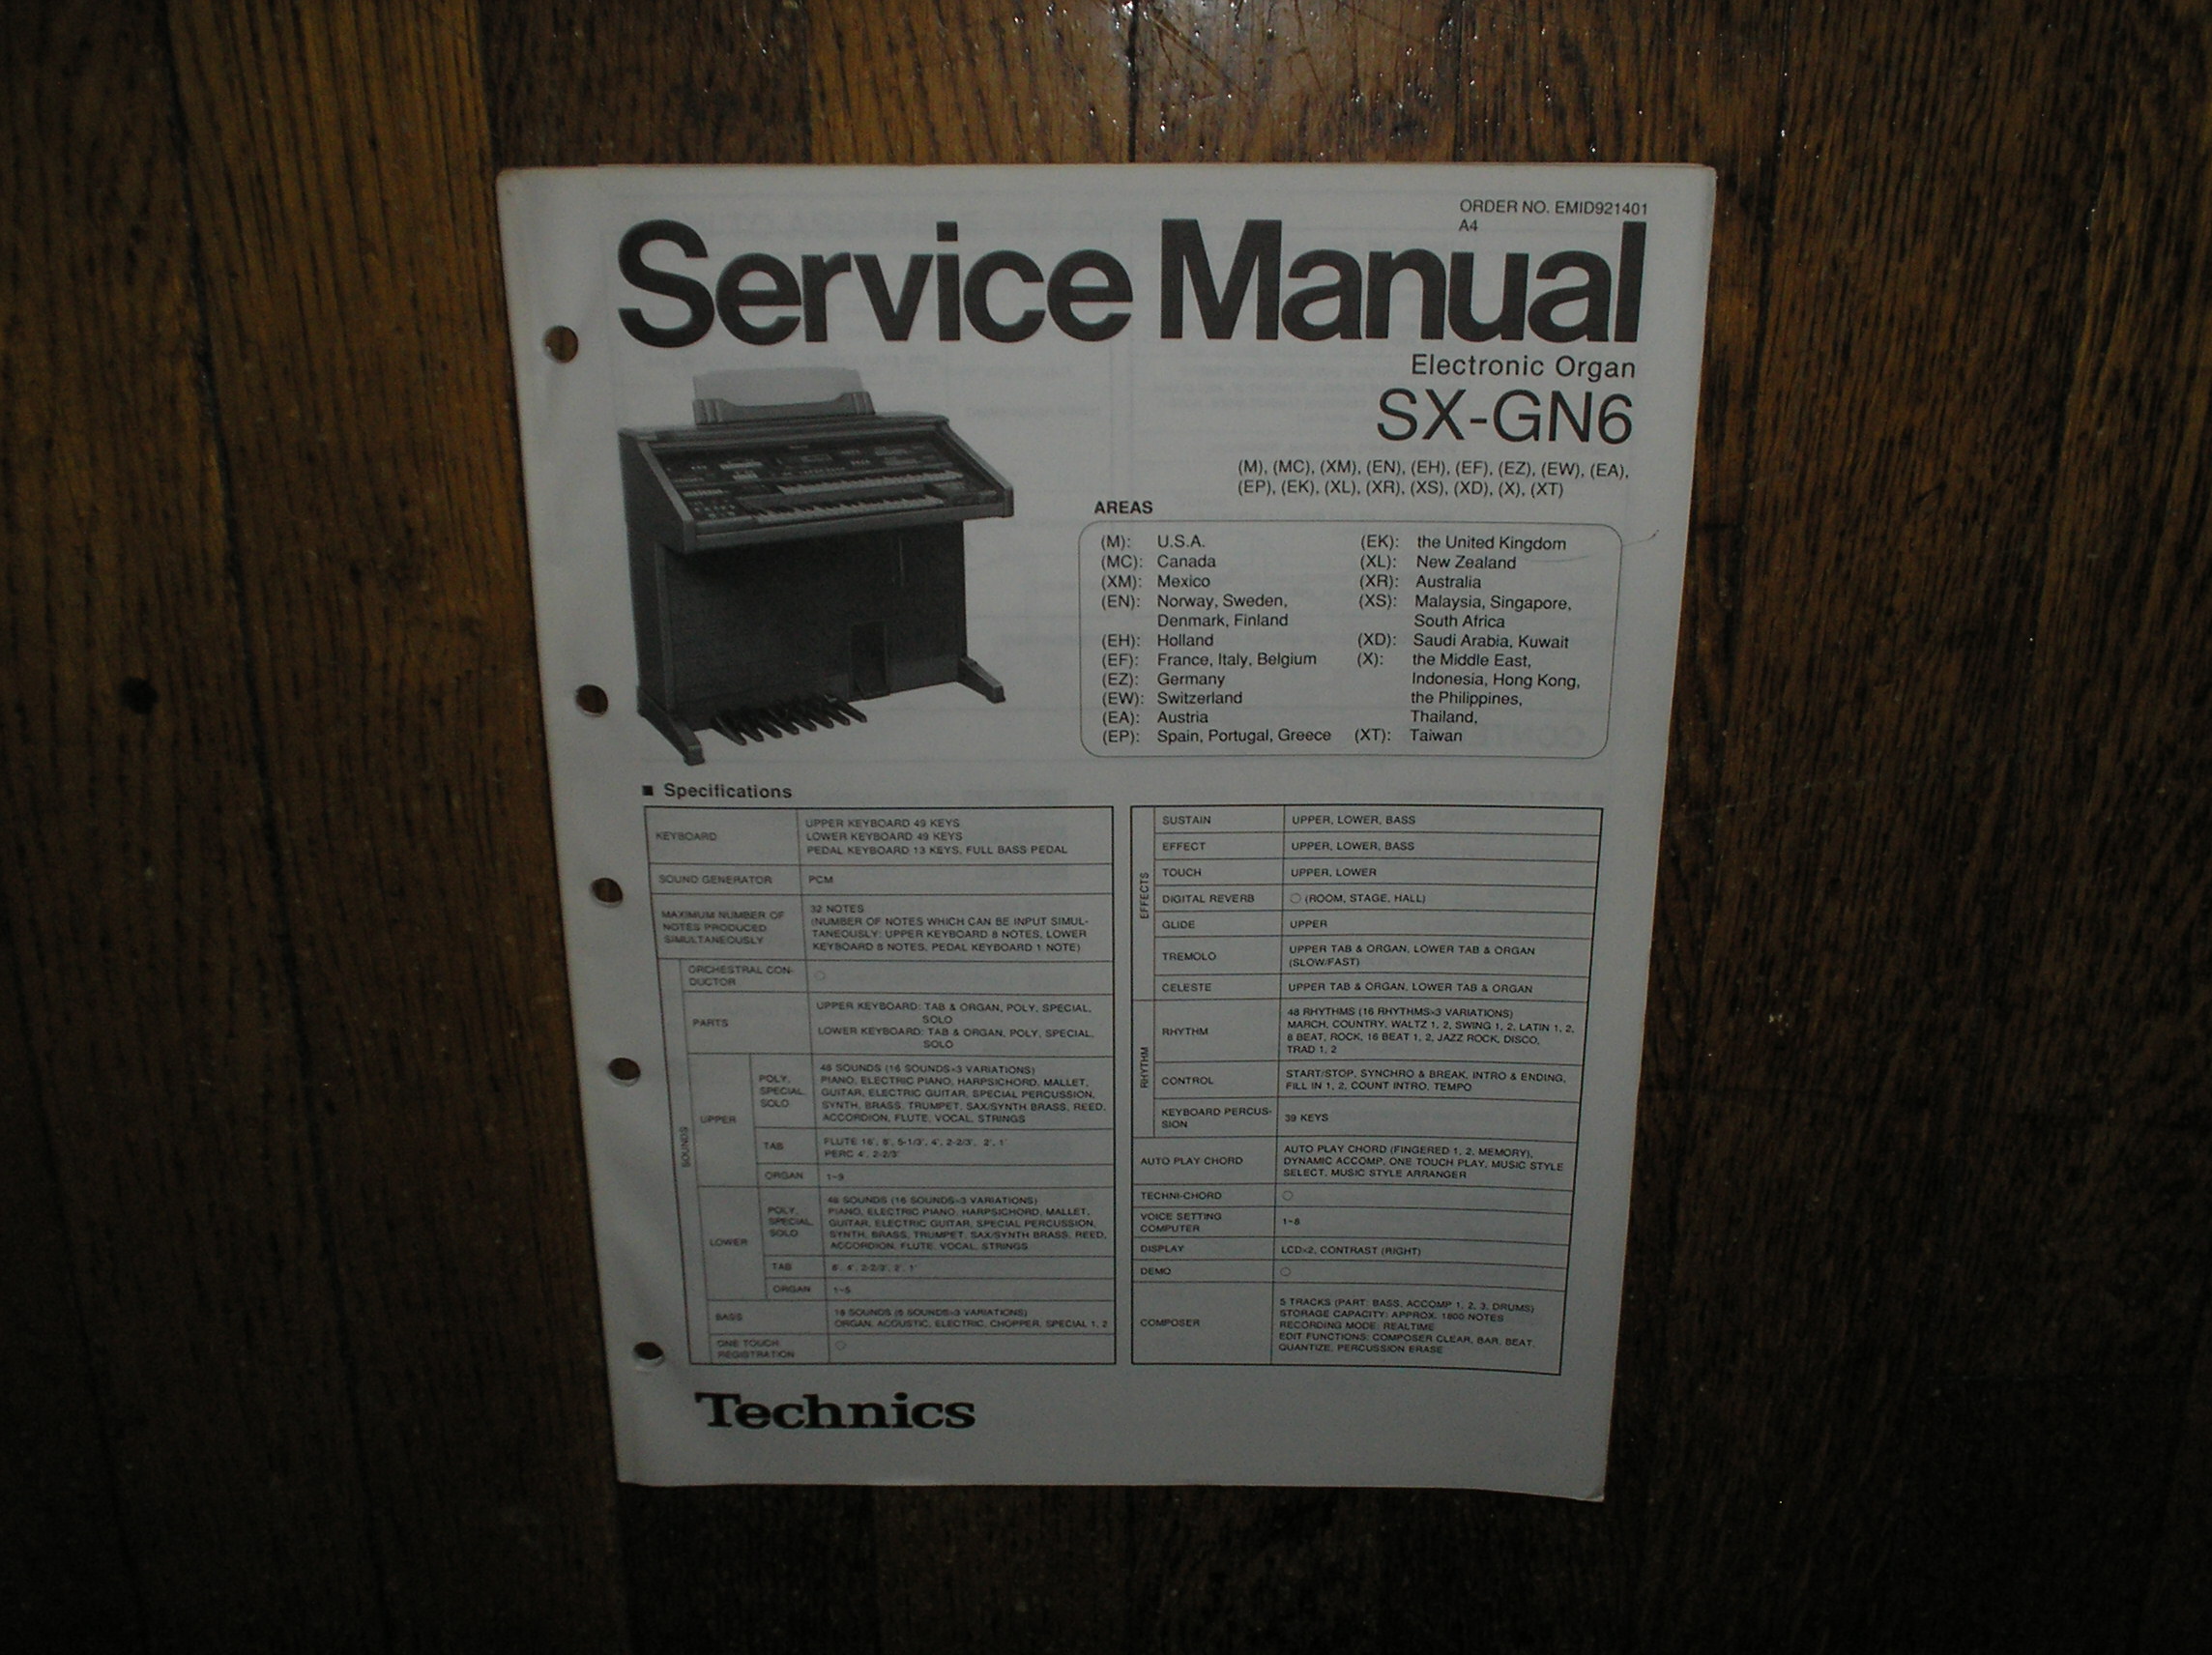 SX-GN6 Electric Organ Service Manual